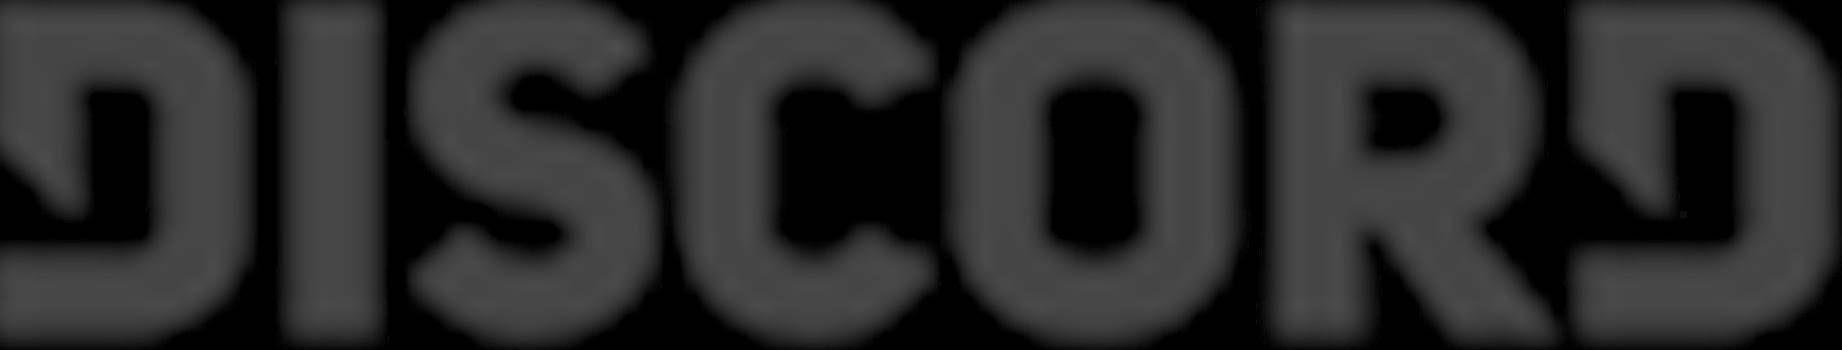 discord logo.png by shoresofelysium